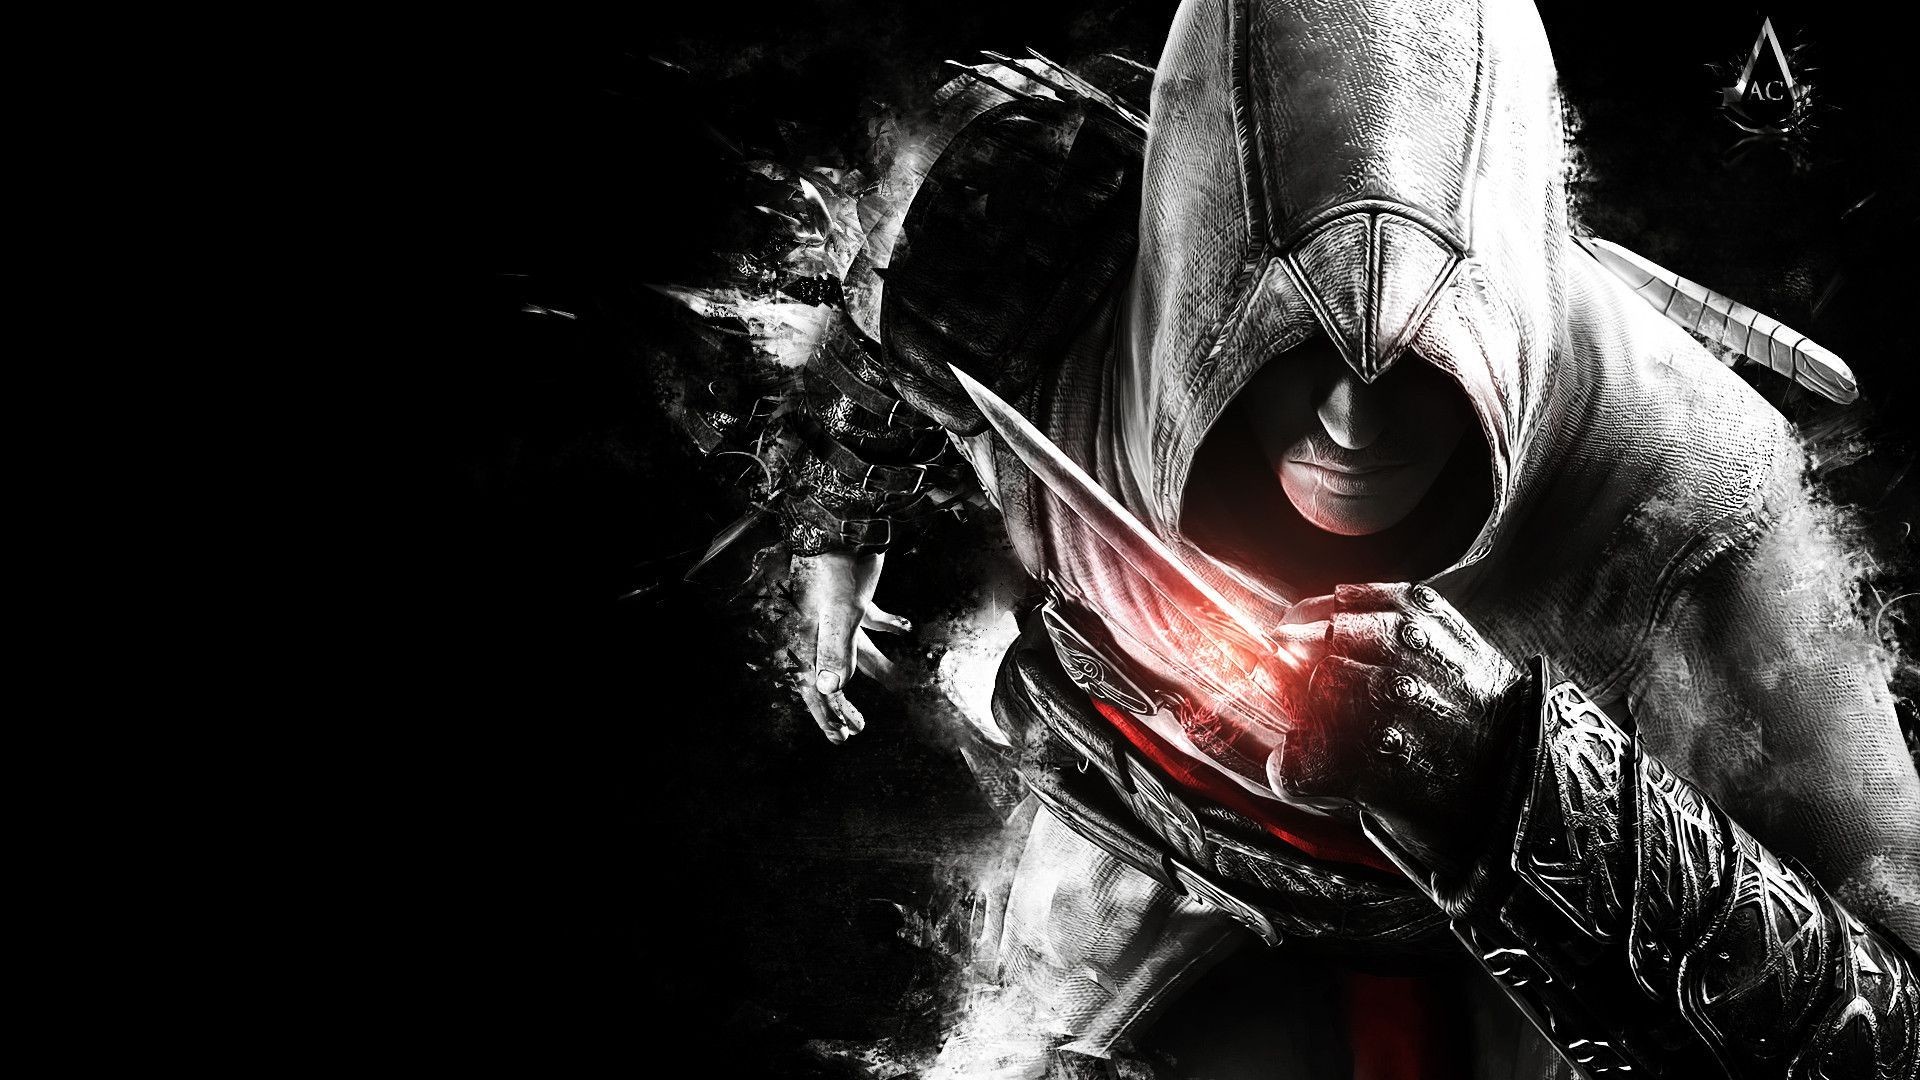 1920x1080 Dark Assassin's Creed Wallpaper Black White Simple Classic Sword Motive  Adjustable Personalized